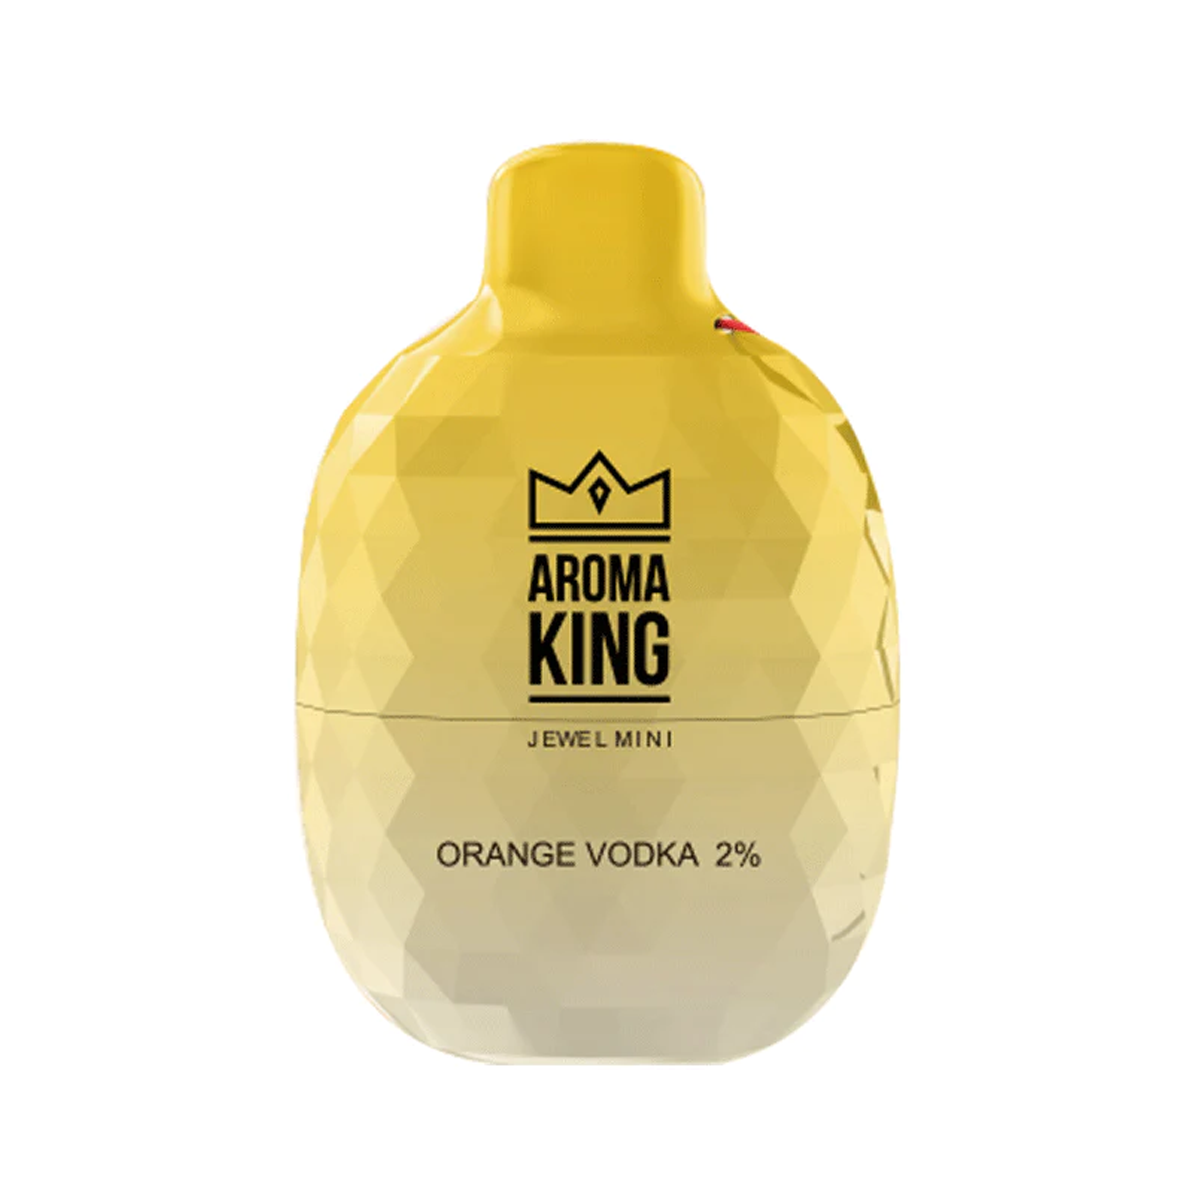 Aroma King Diamon Jewel - Vodka all'arancia 20 mg